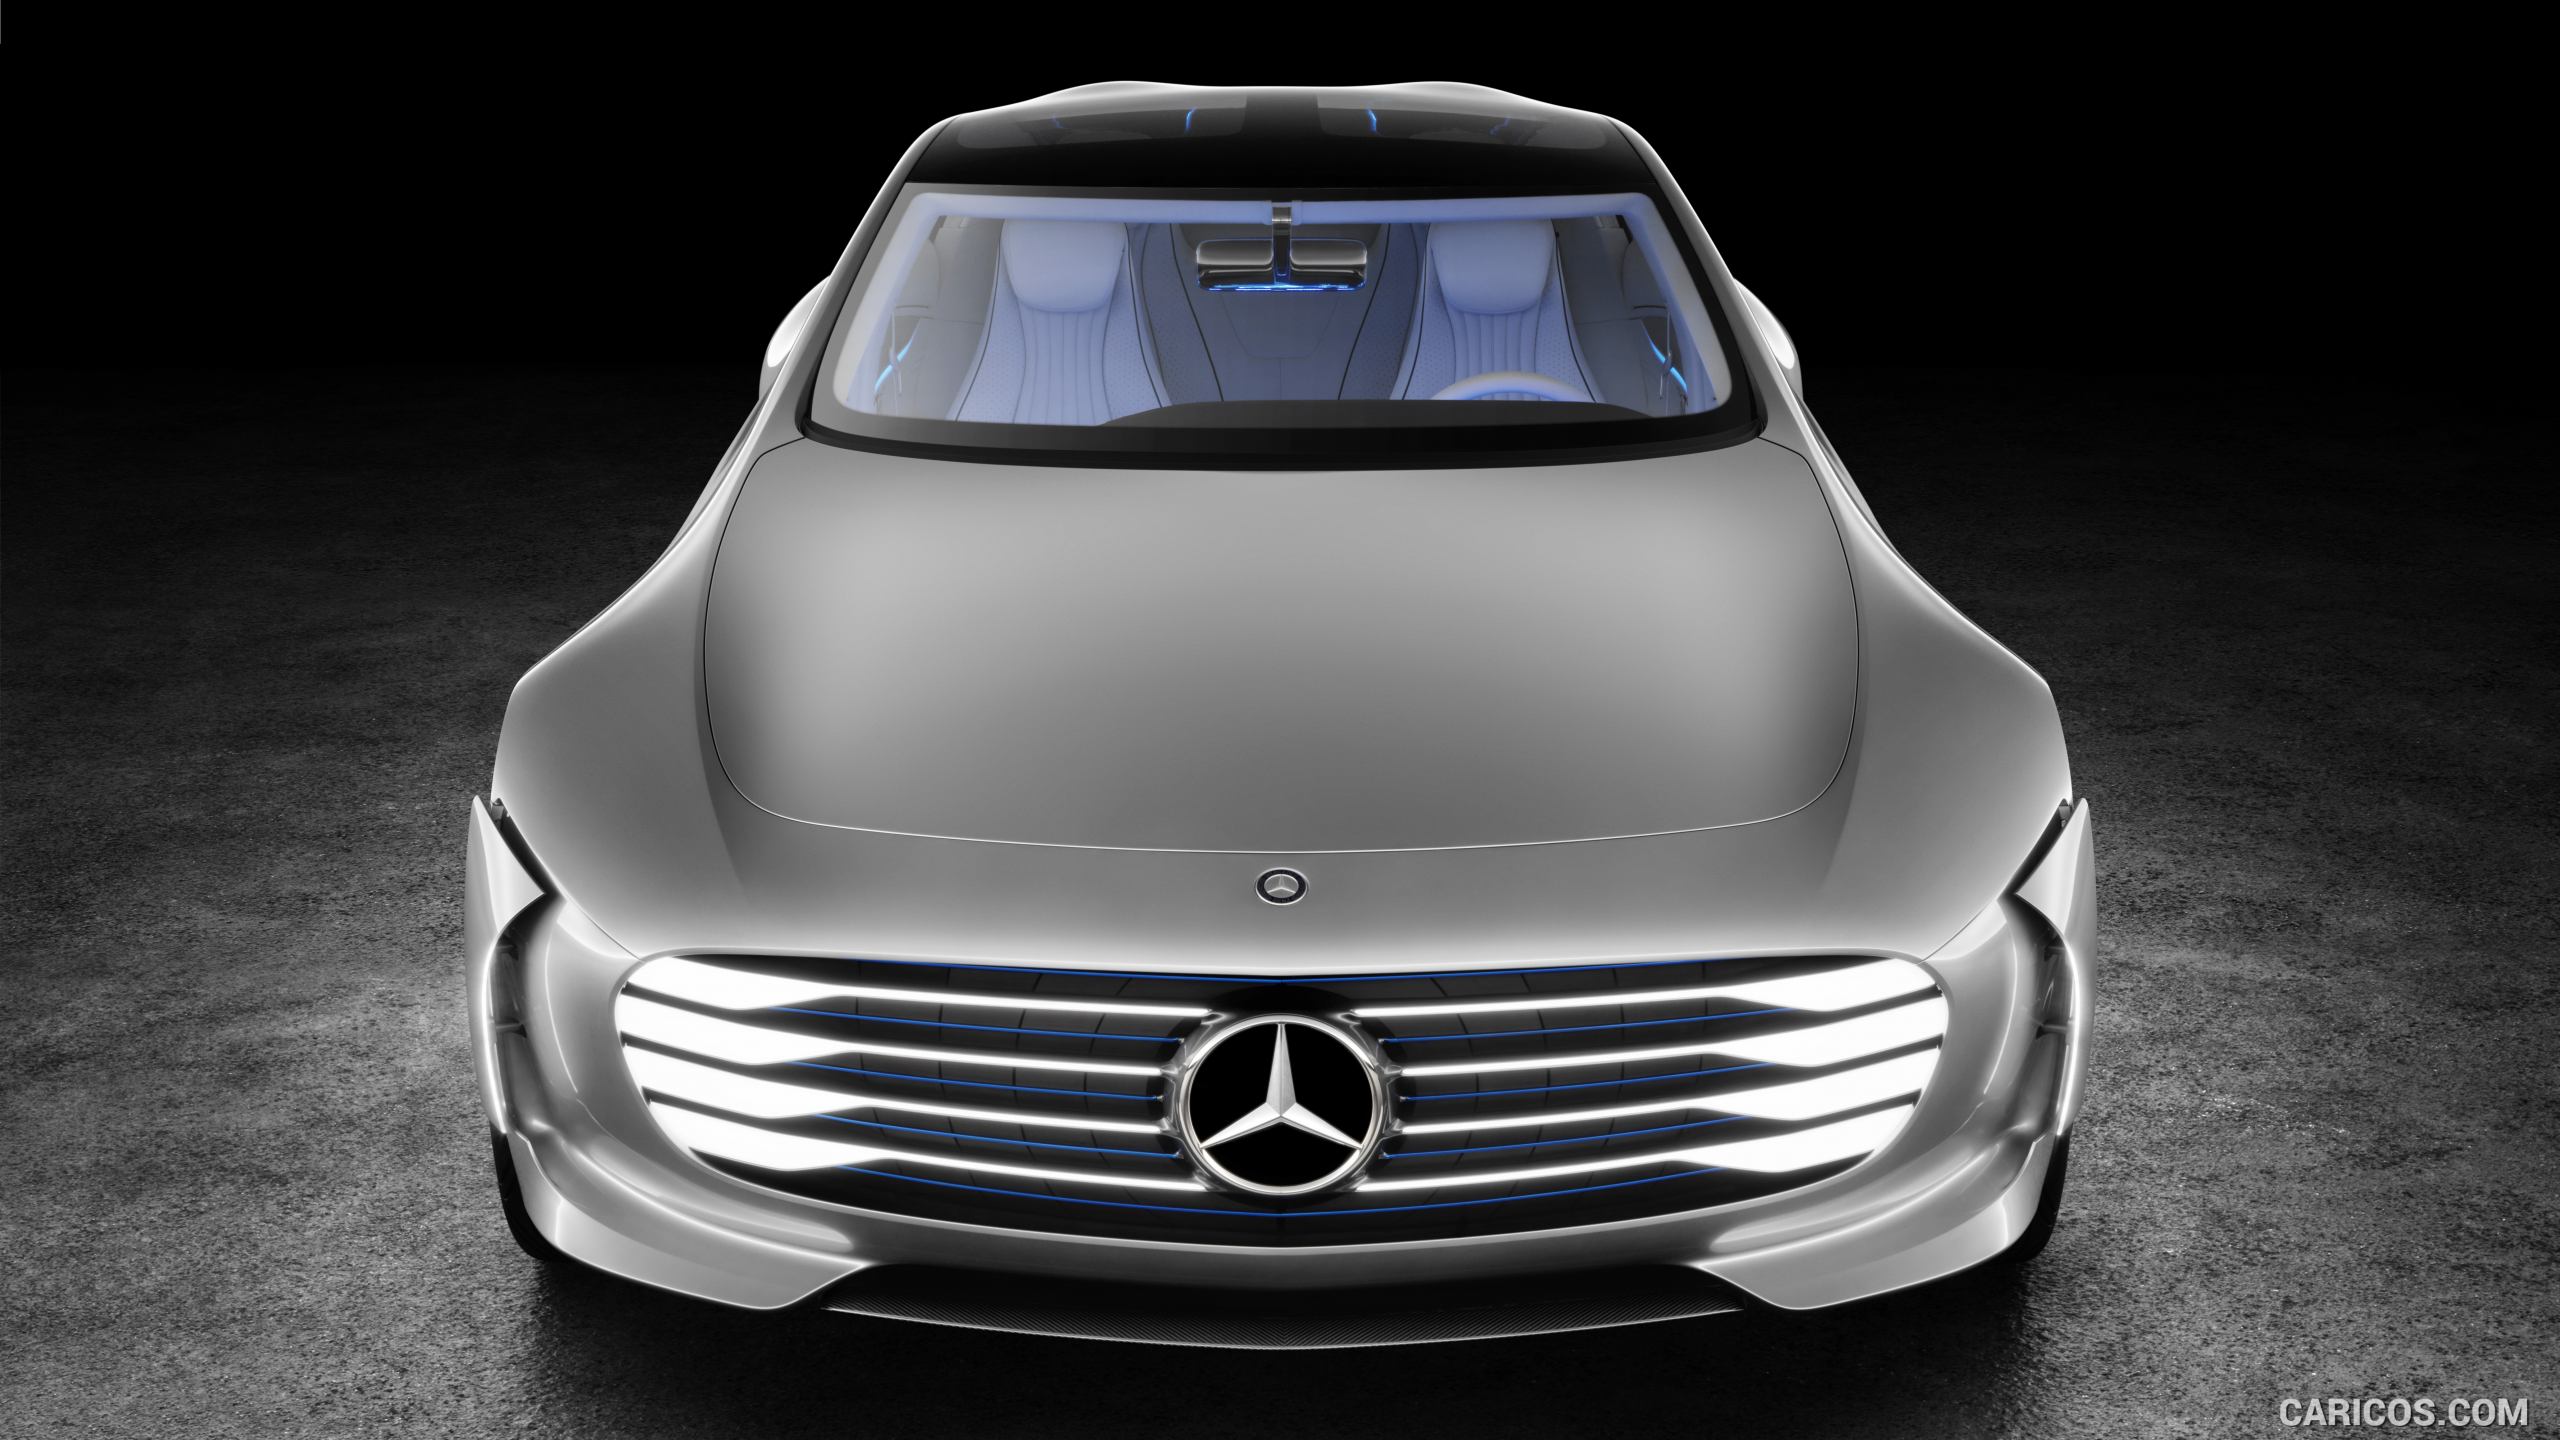 2015 Mercedes-Benz Concept IAA (Intelligent Aerodynamic Automobile) - Front, #26 of 49